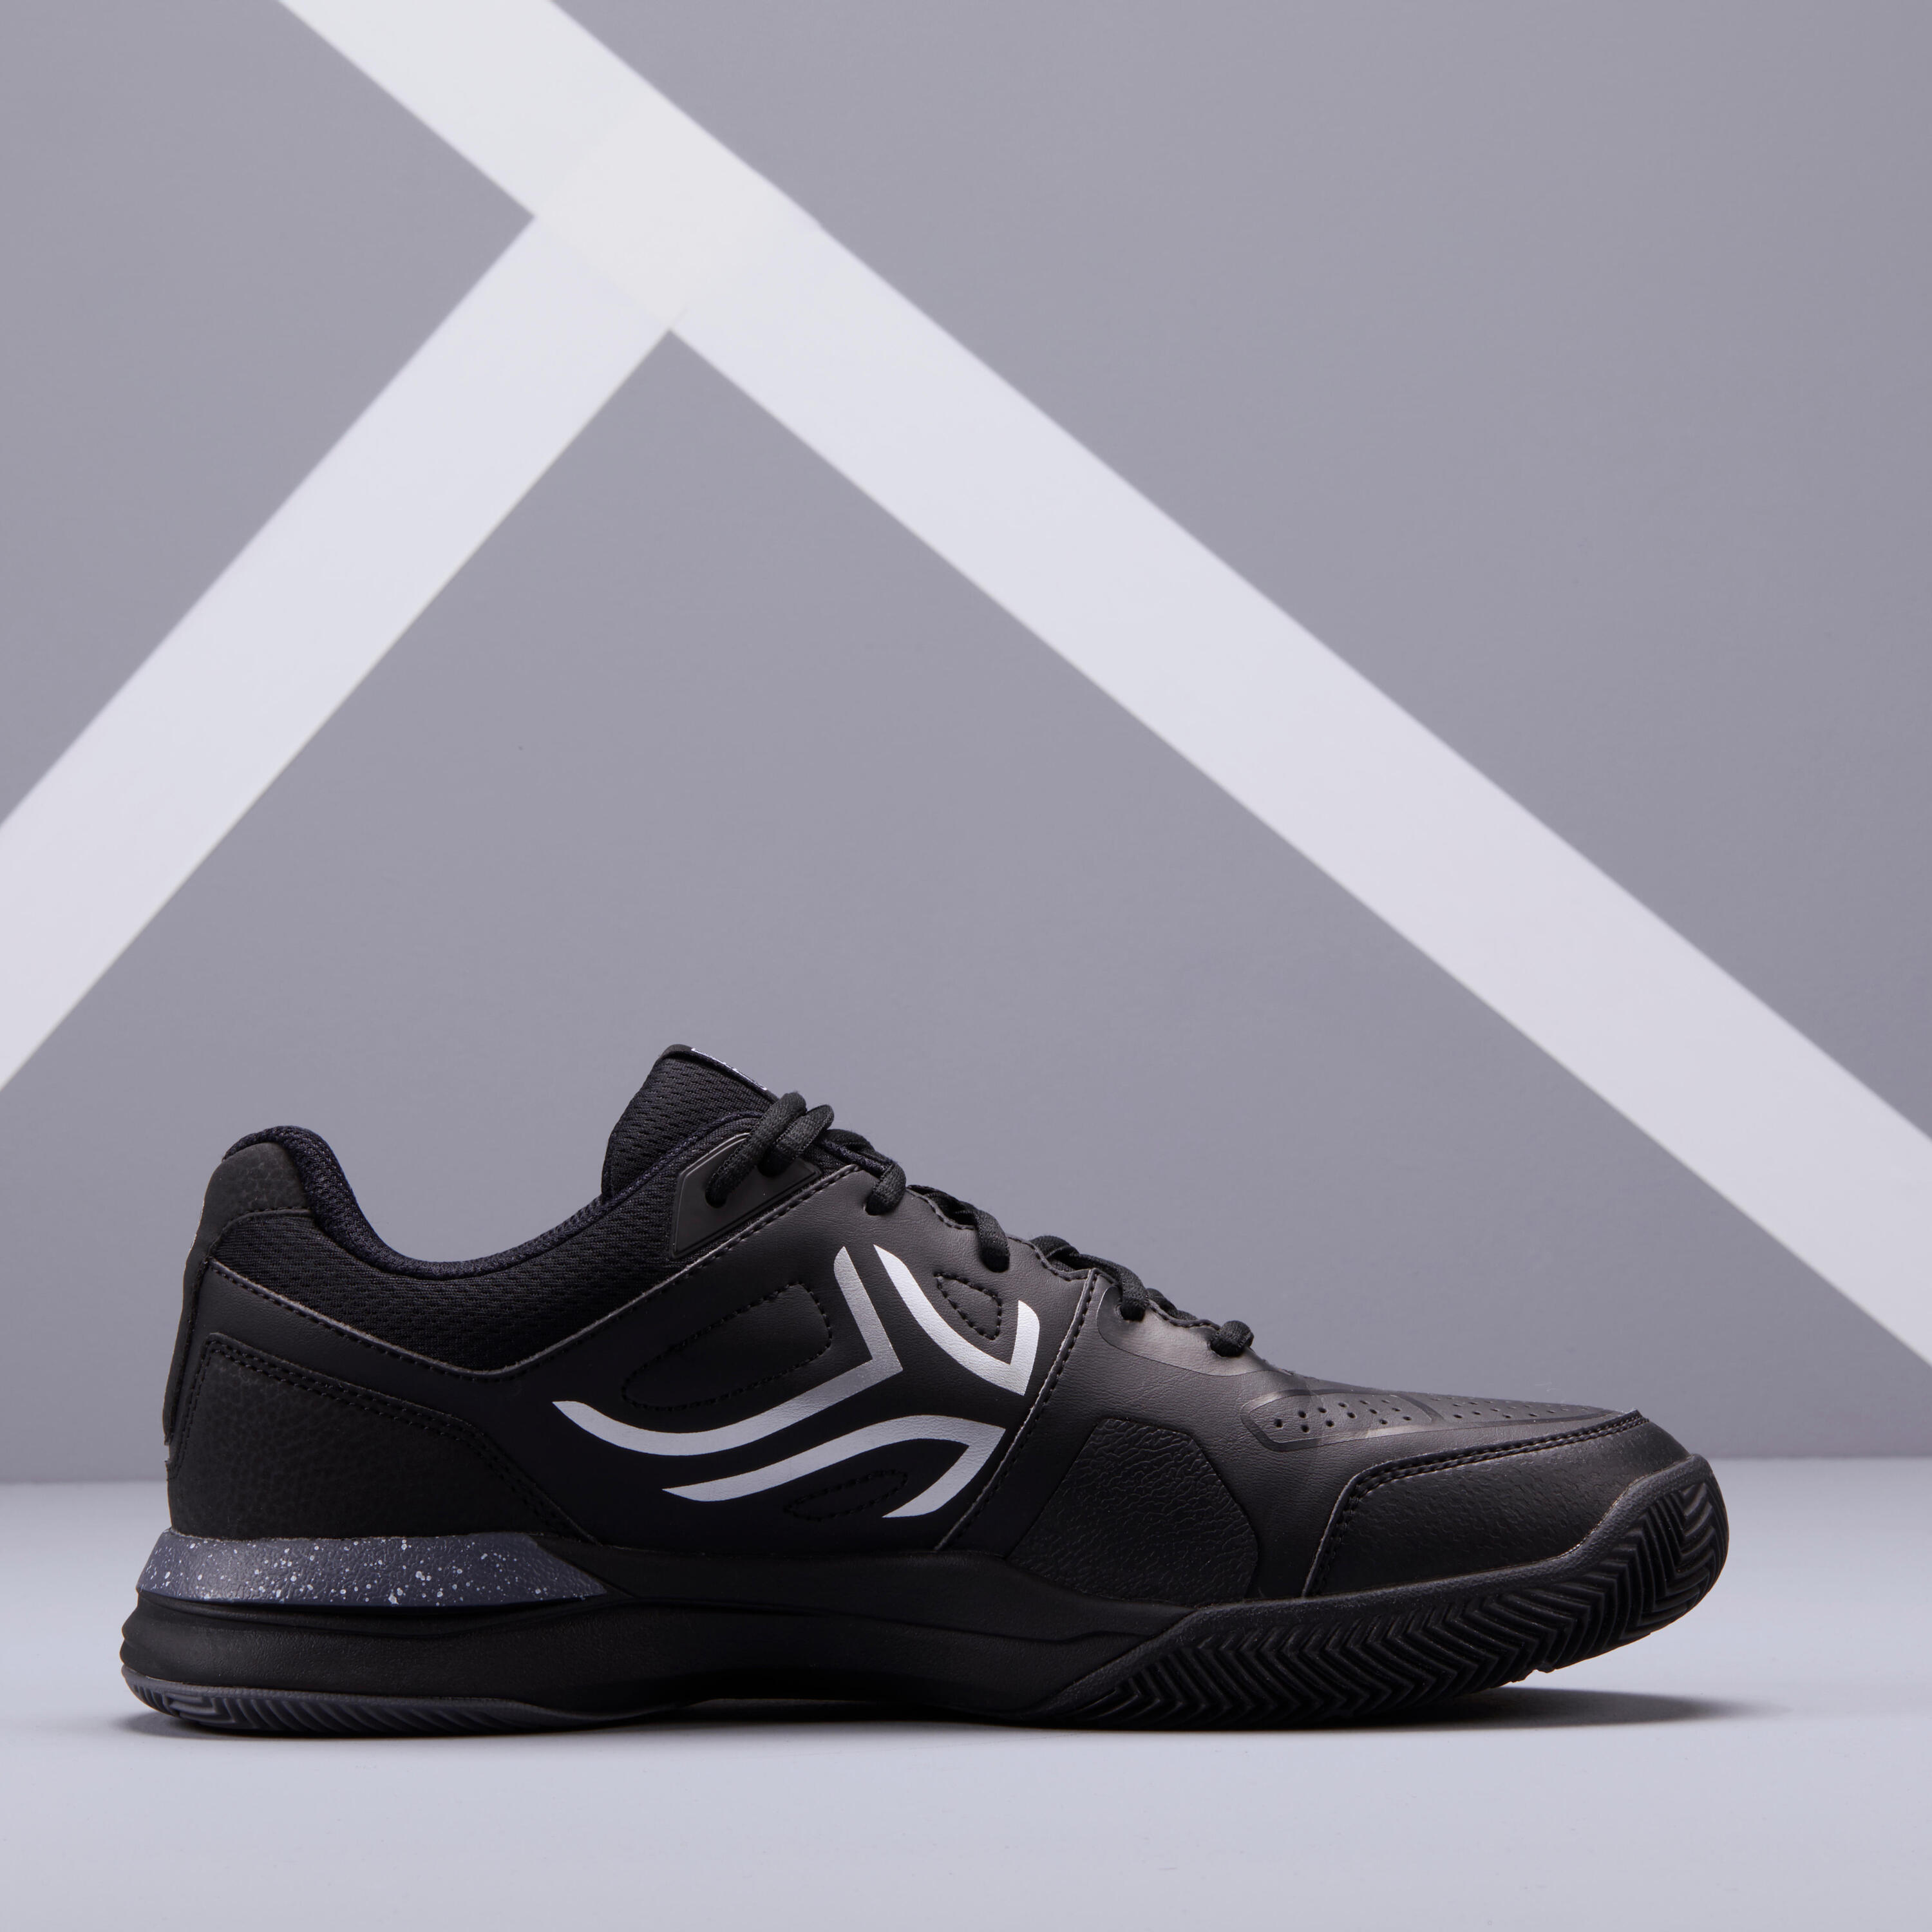 Men's Clay Court Tennis Shoes TS 500 - Black/Grey 2/8